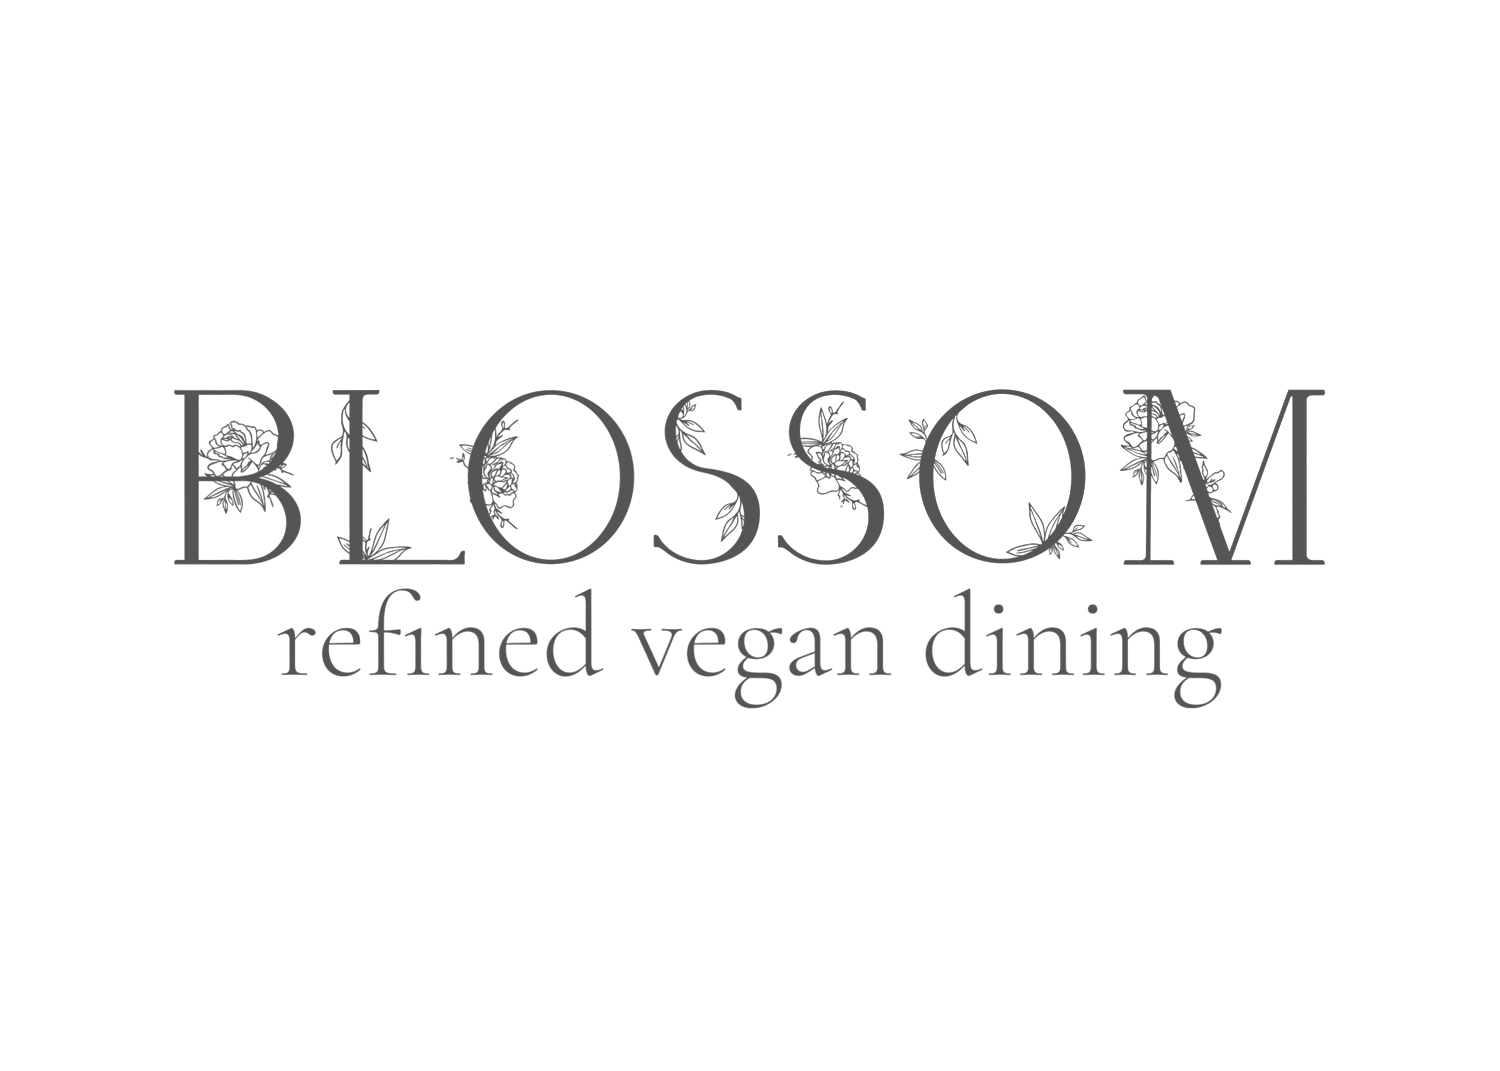 Restaurant.com Logo - Blossom Restaurants